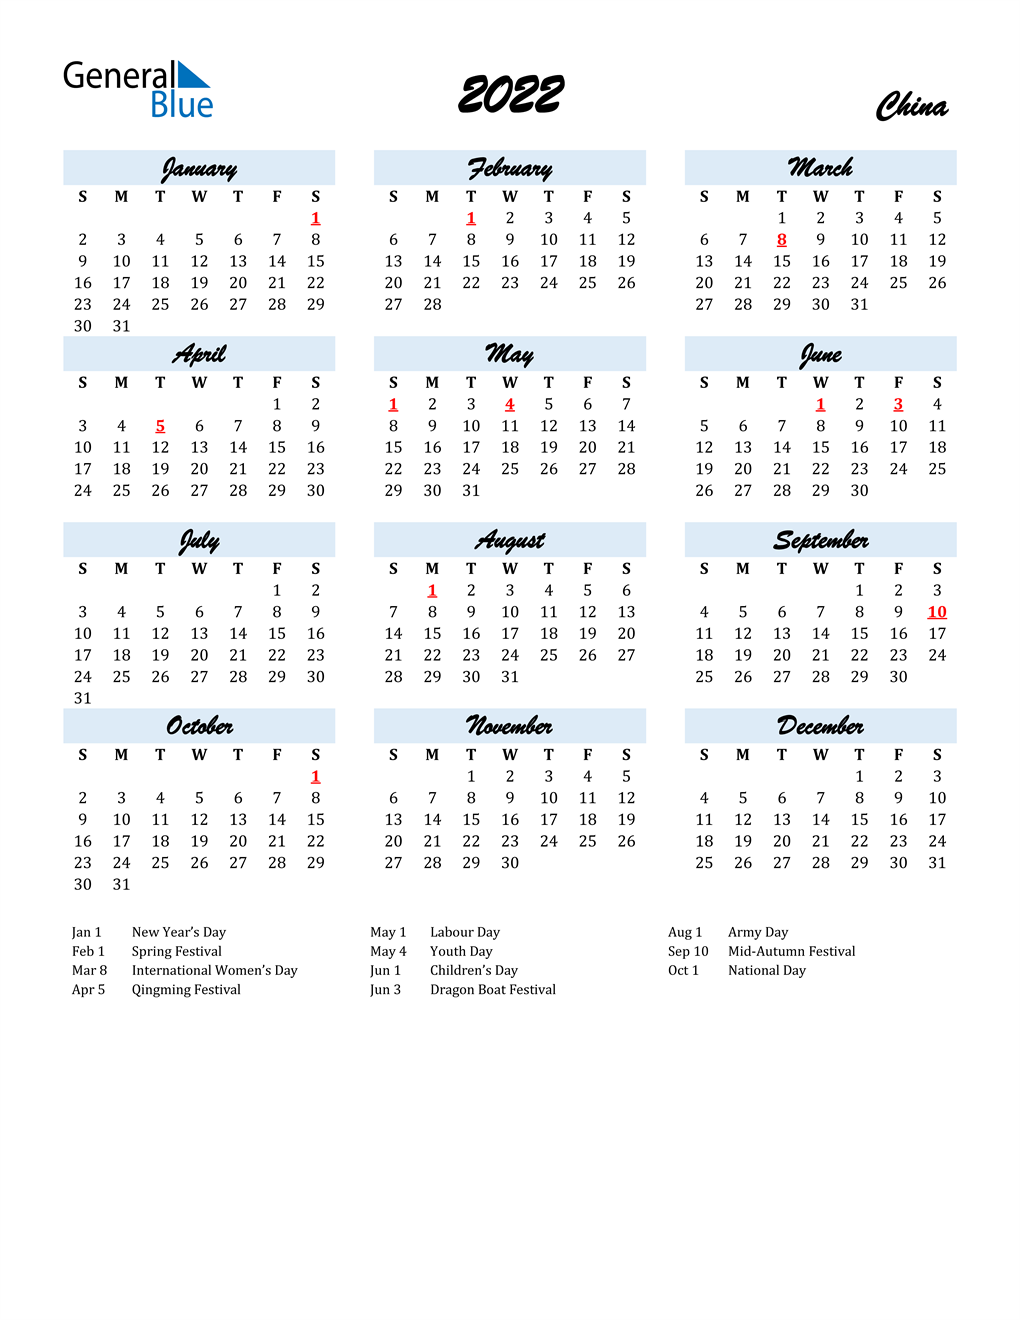 2022 China Calendar With Holidays